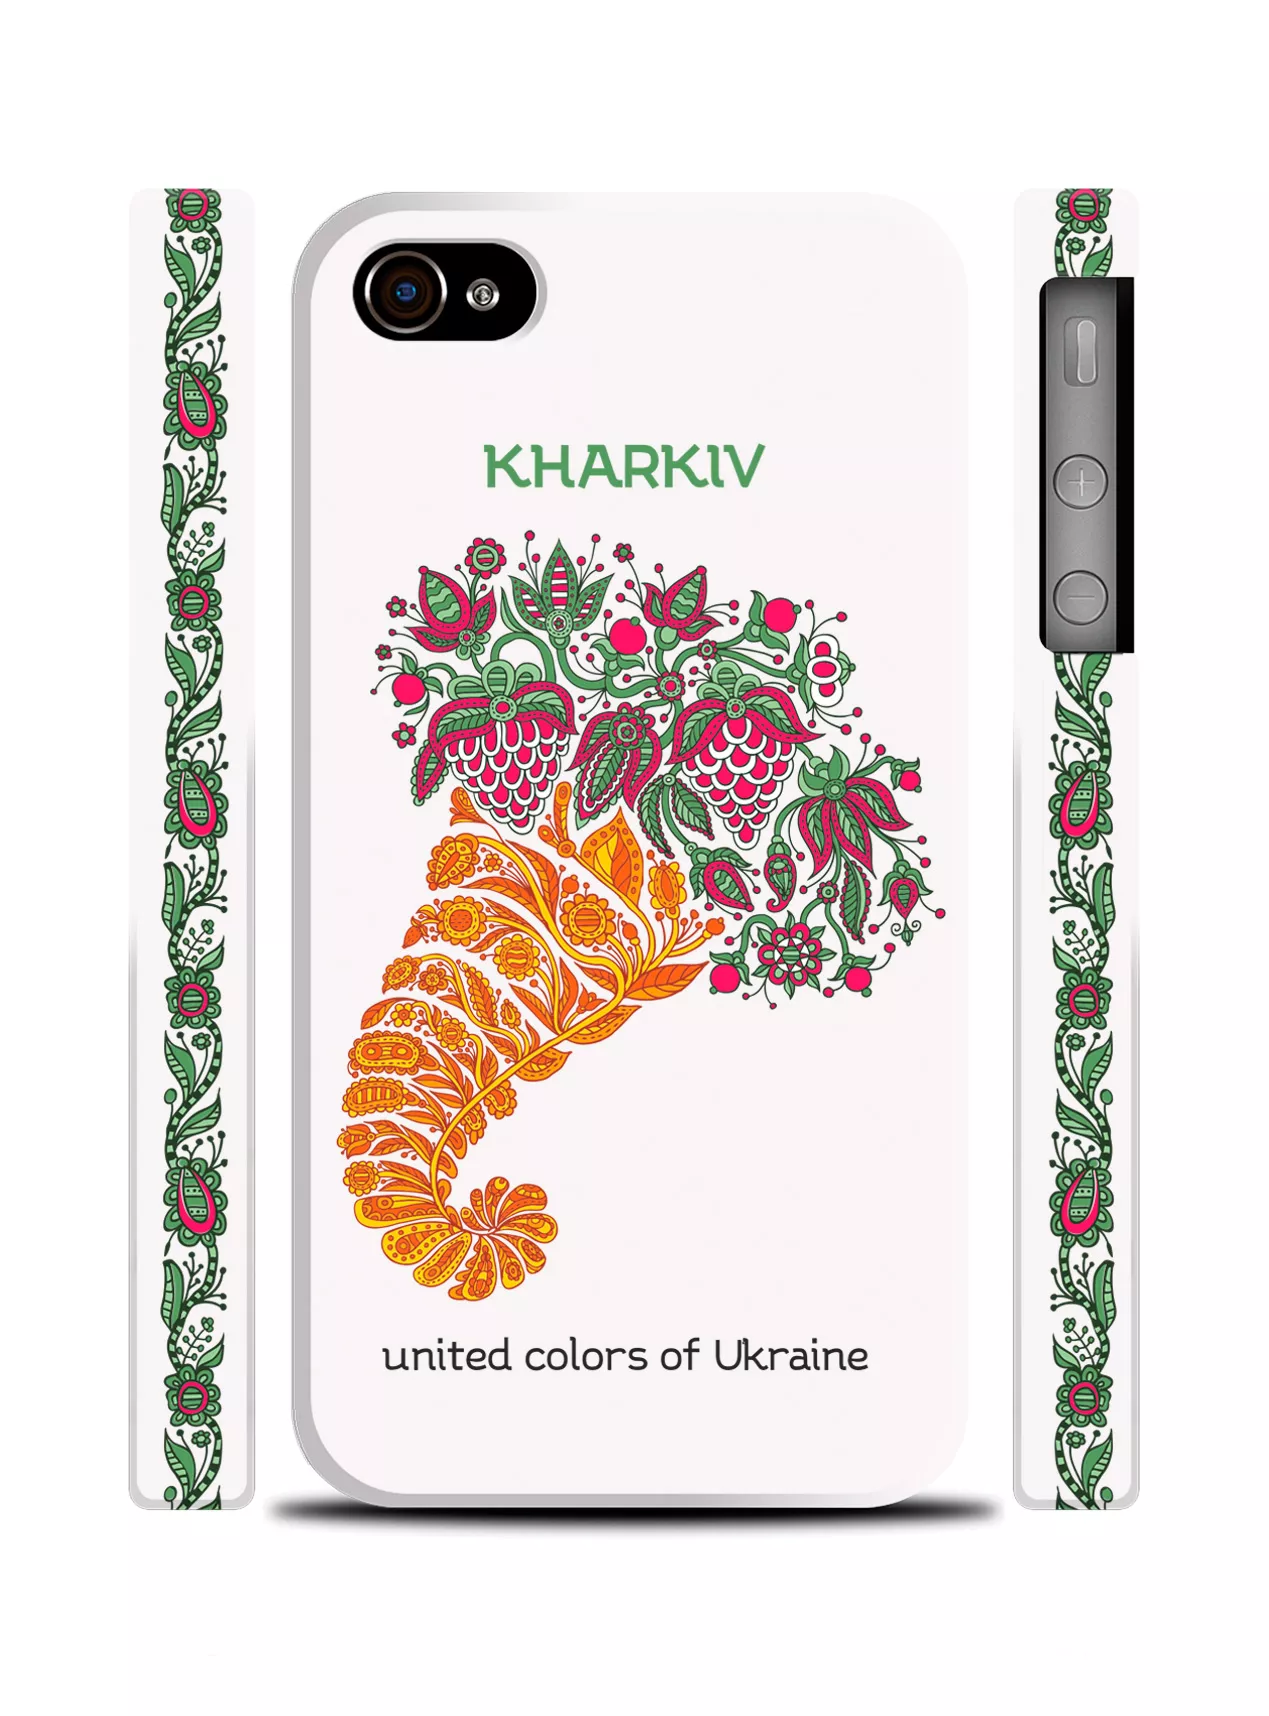 Чехол на iPhone 4/4S - Харьков by Chapaev Street